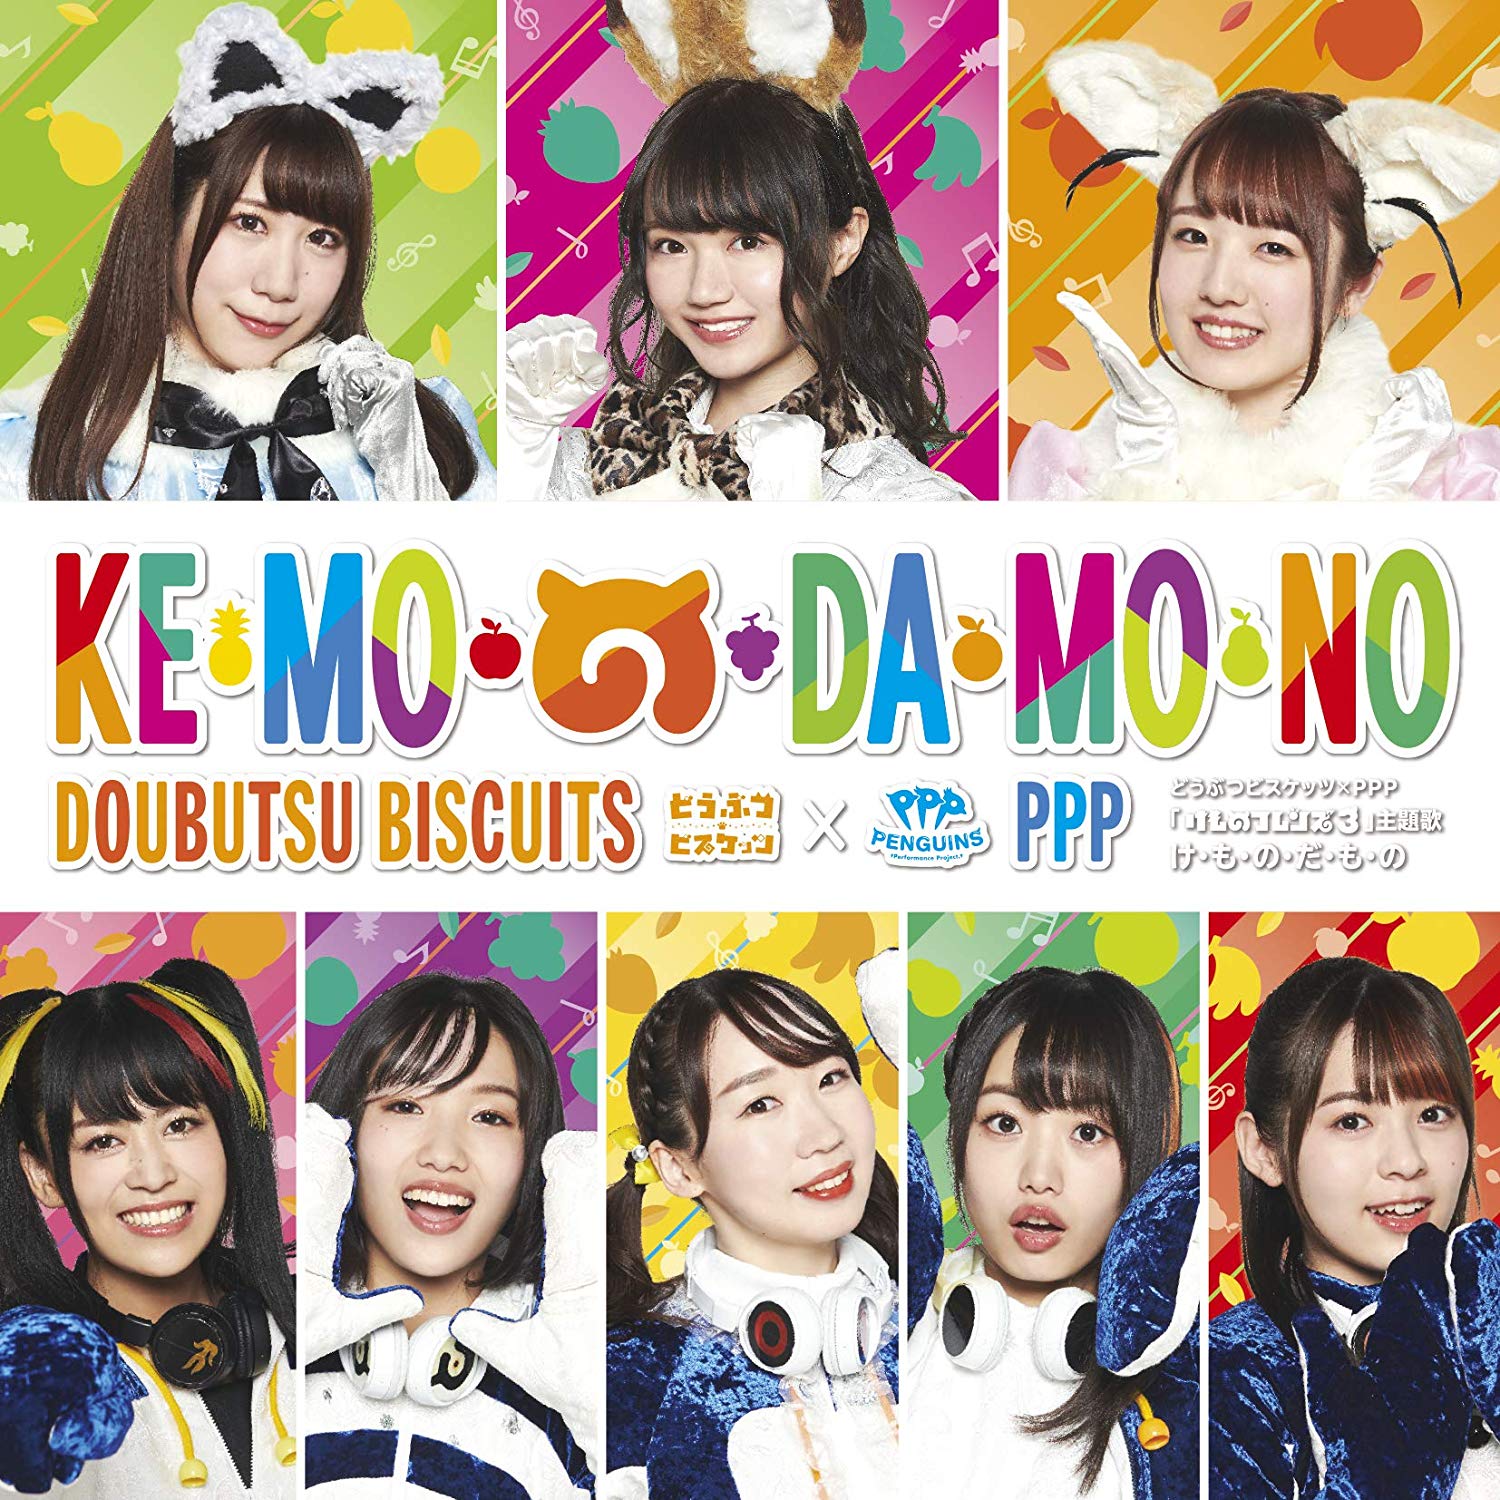 Kemono Damono Limited Edition A Album Art.jpg